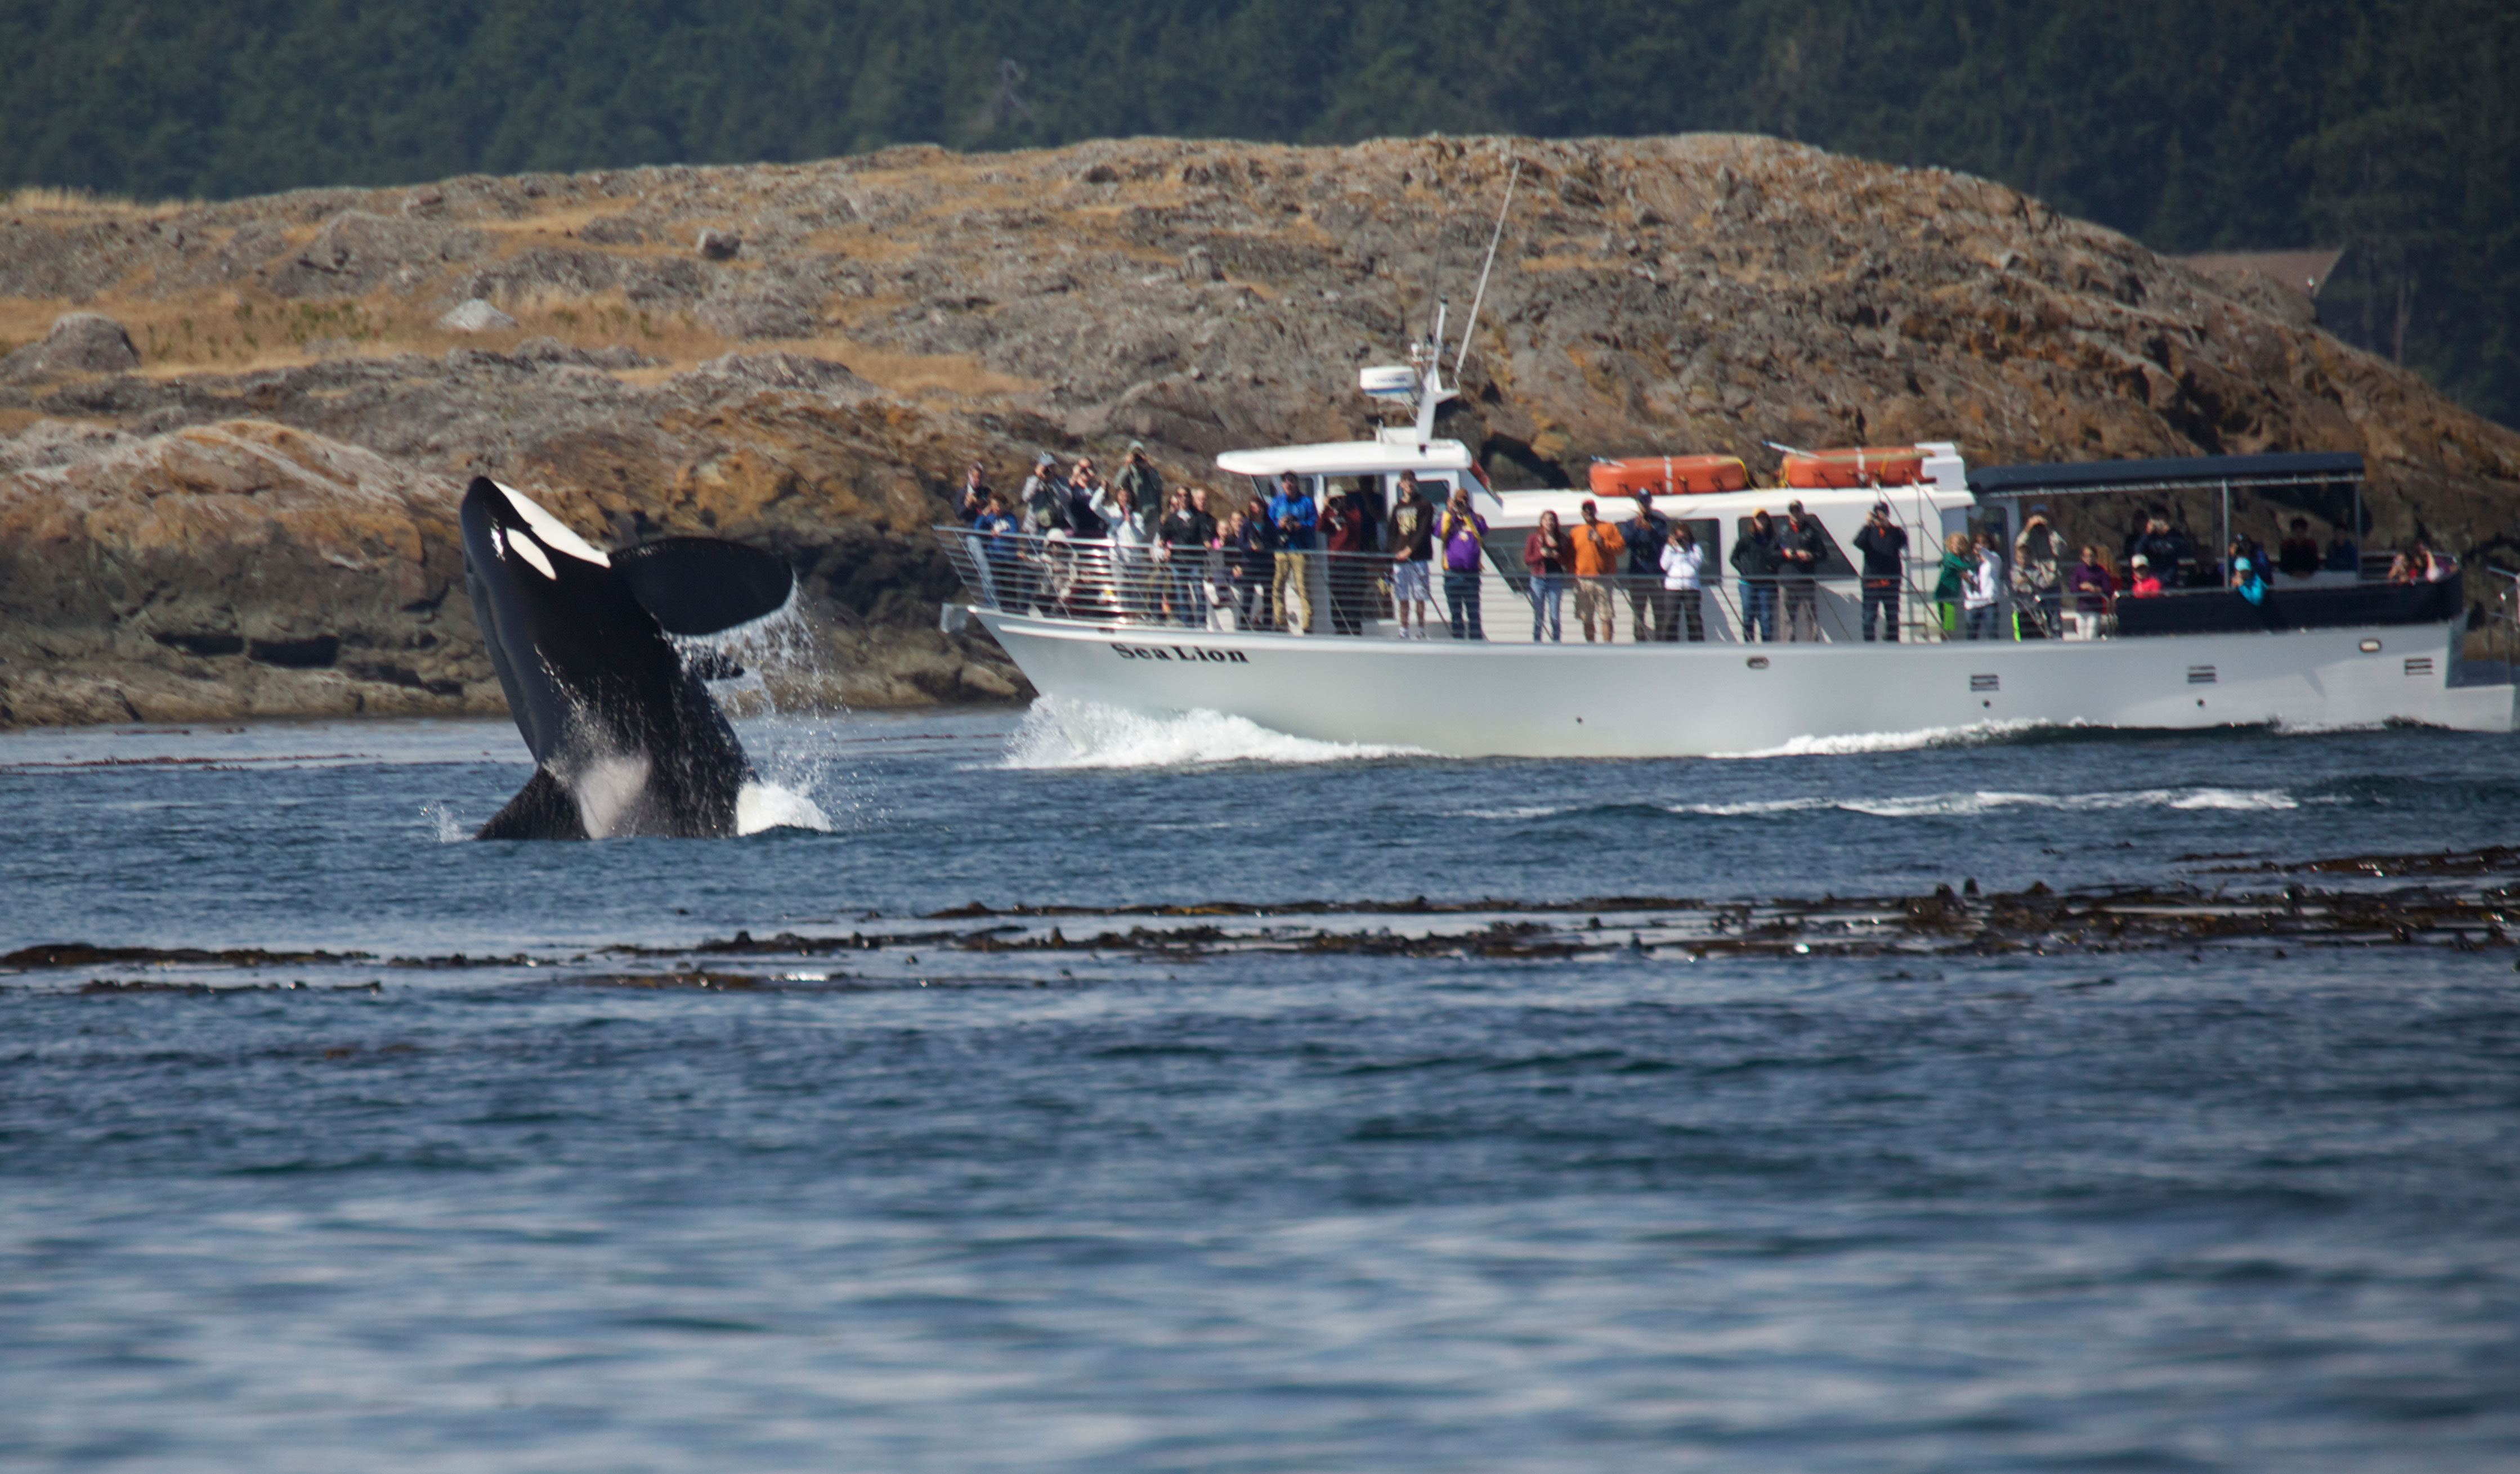 orca tour seattle